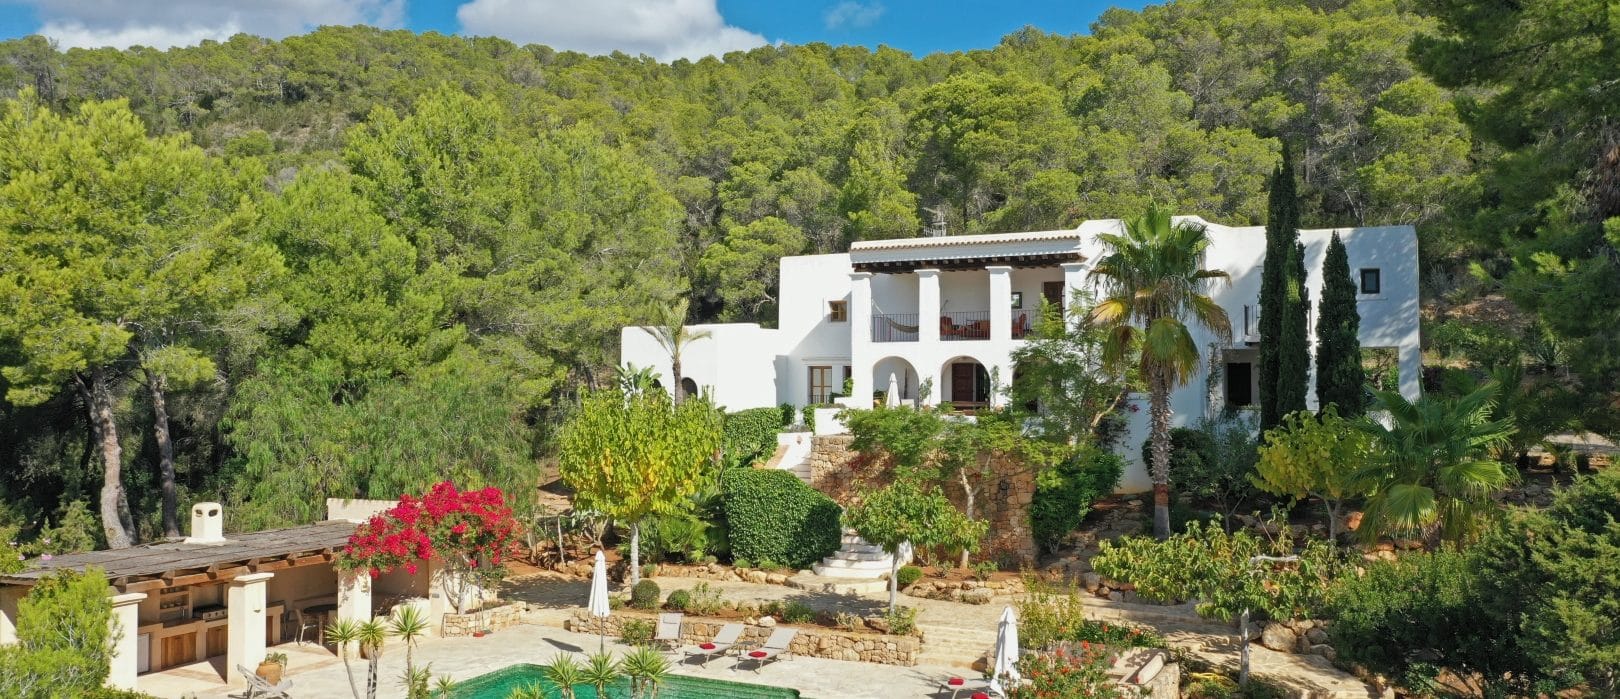 4 Bedroom Villa near Sant Carles  to rent